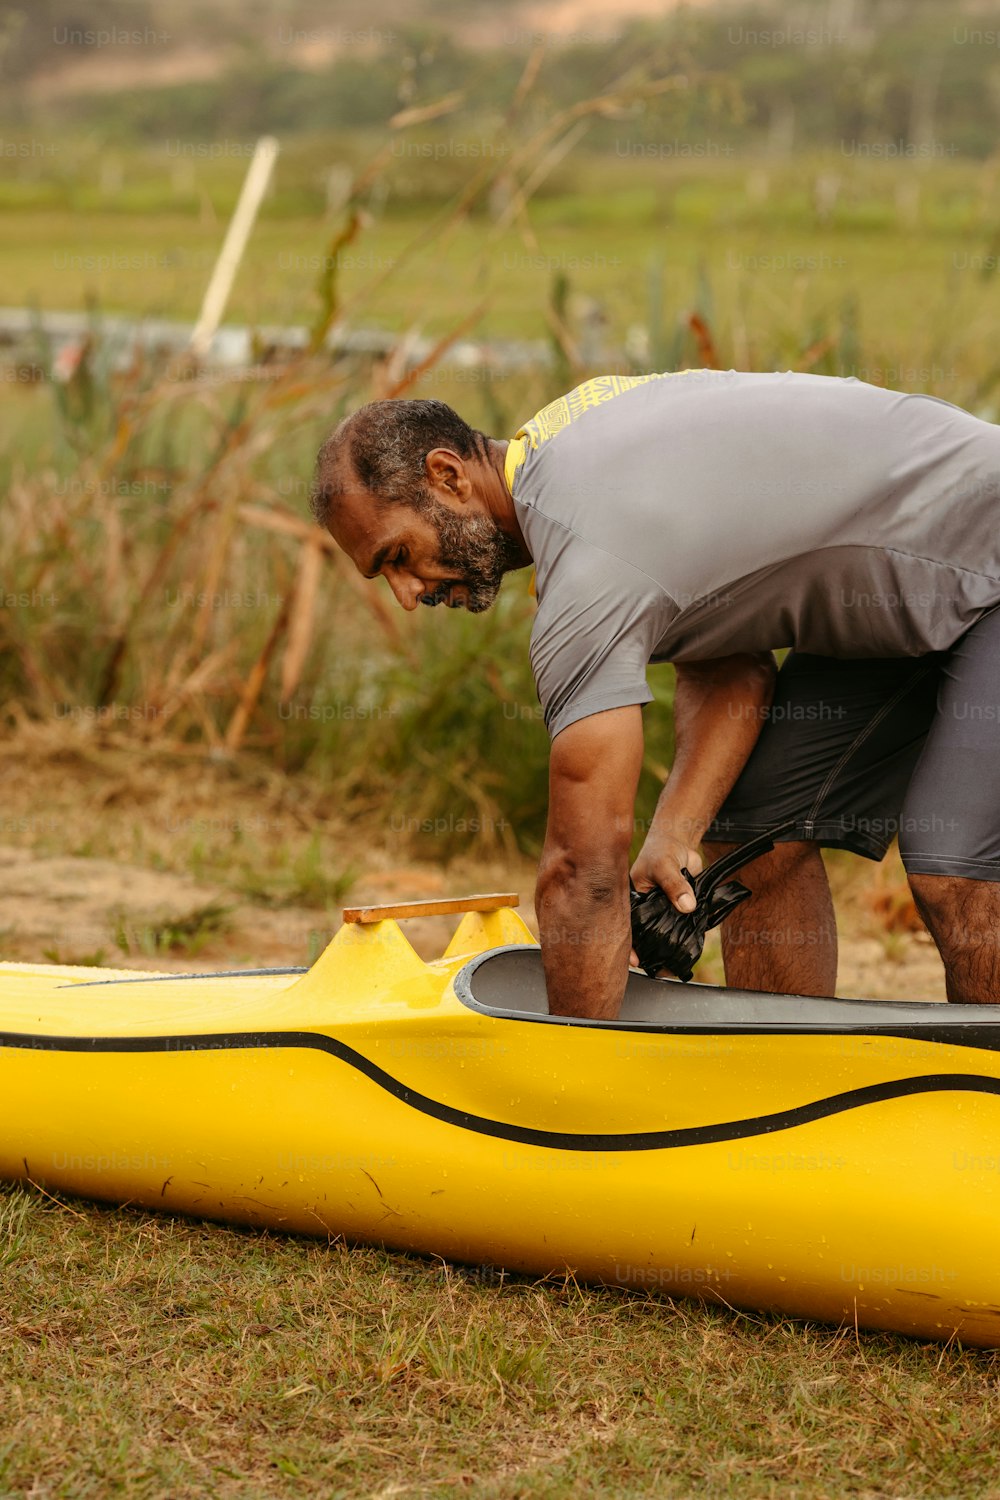 Un uomo che lavora su un kayak a terra